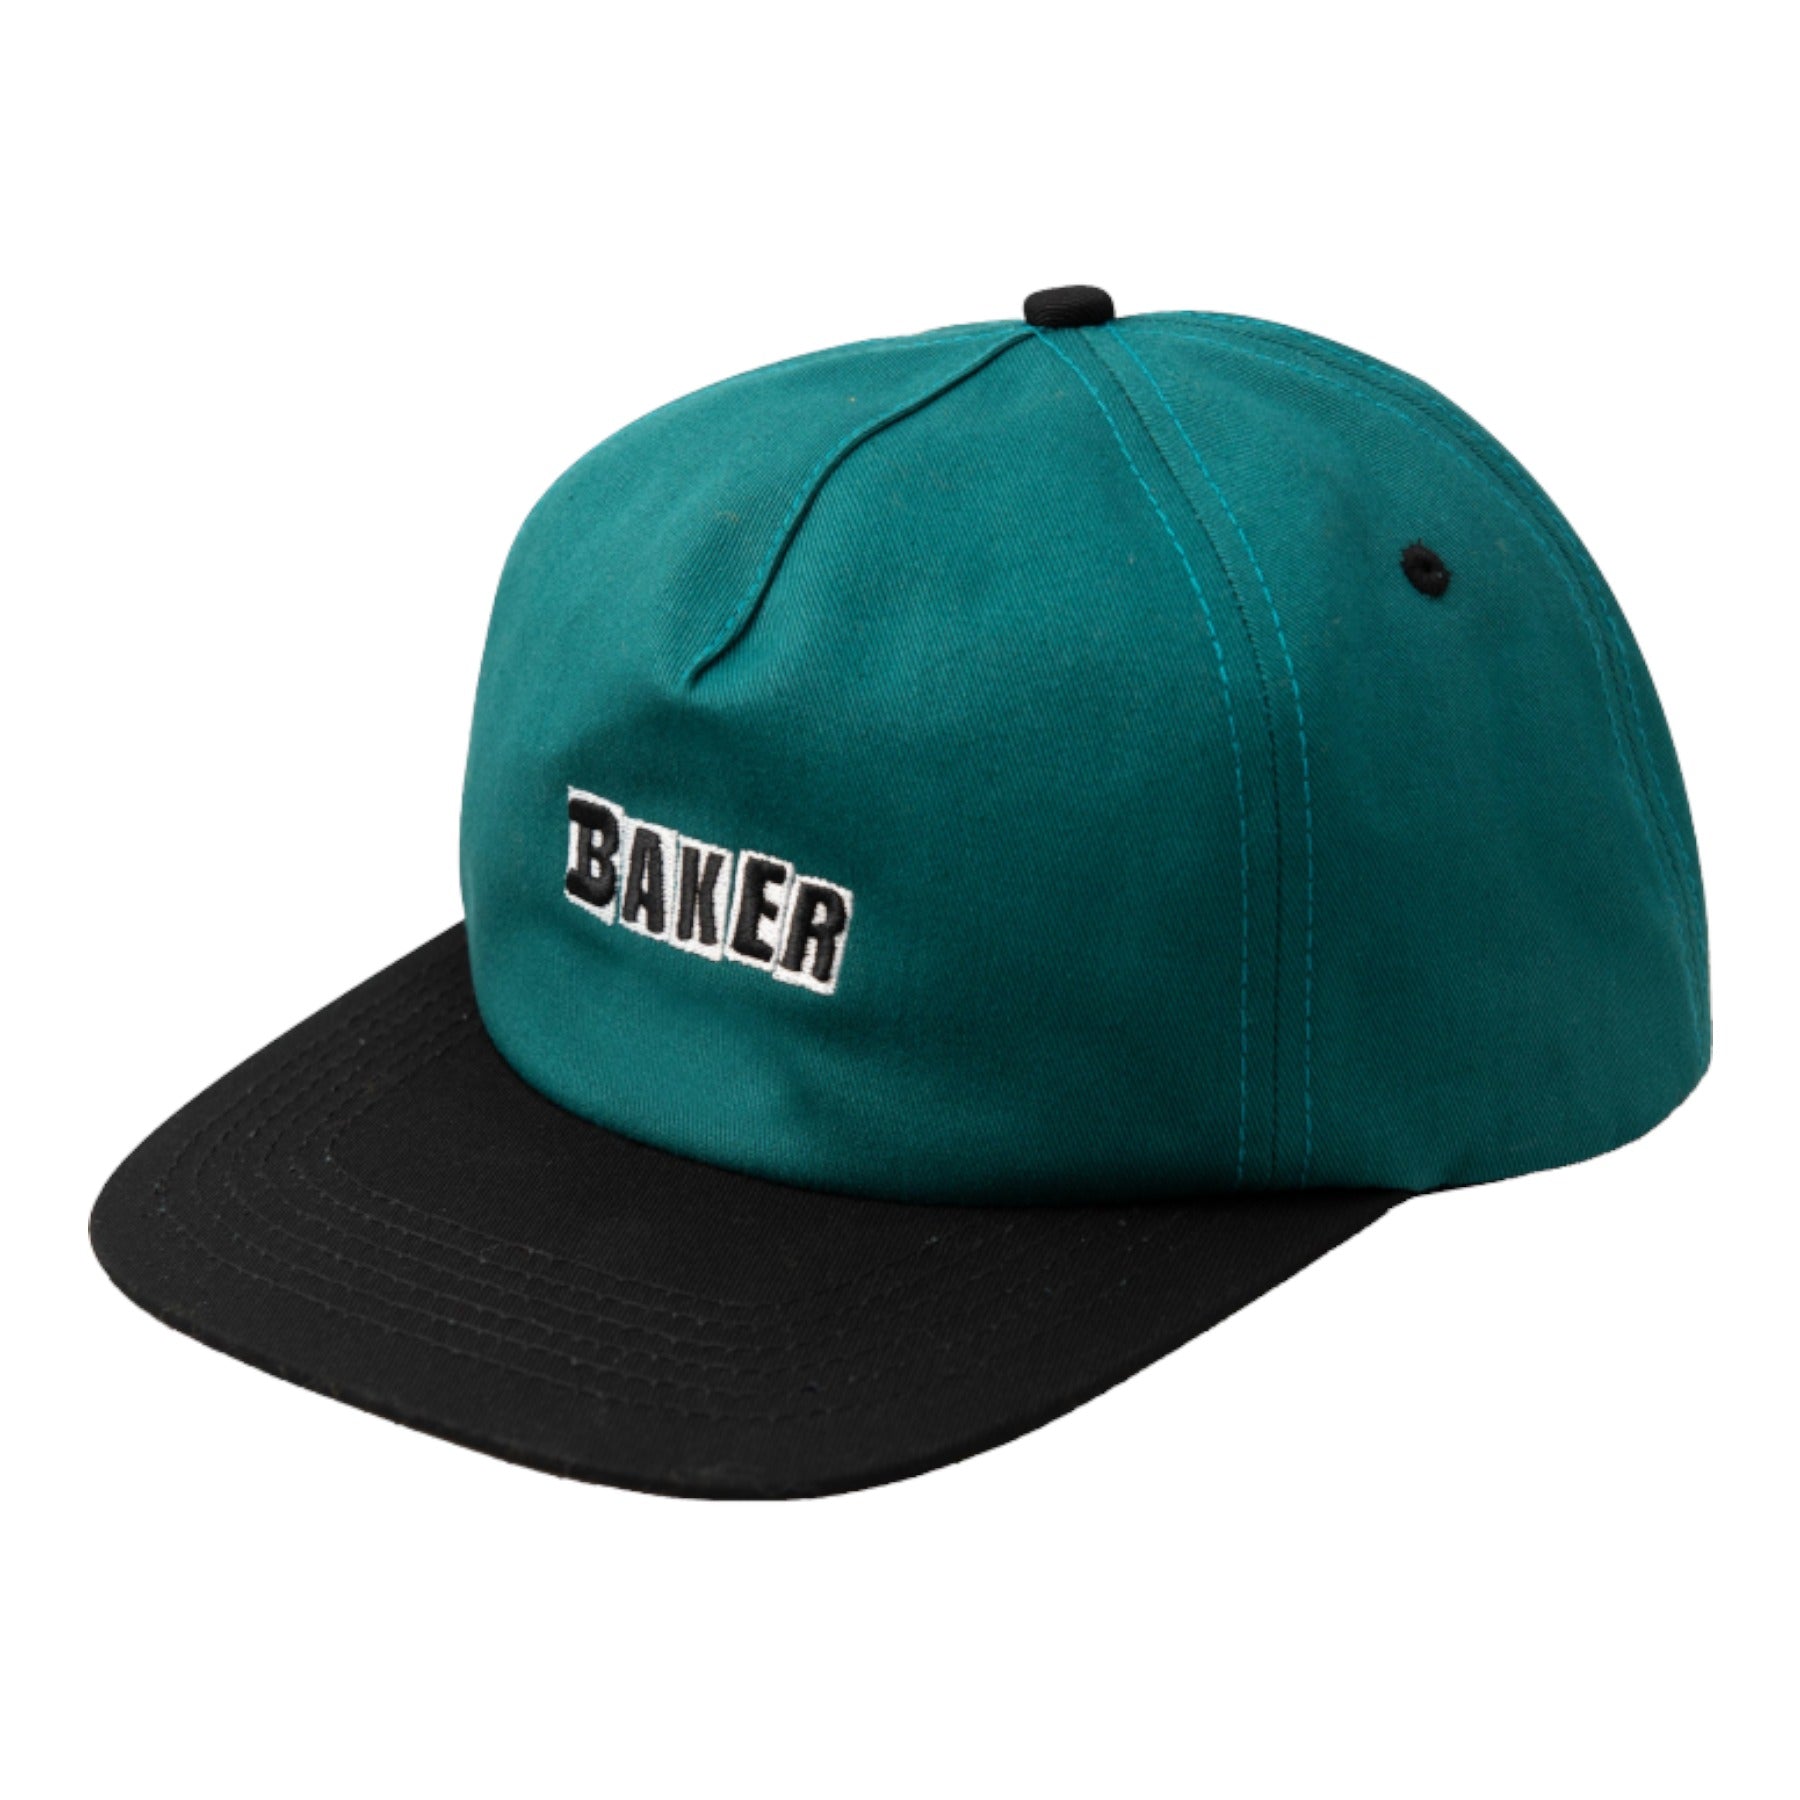 Baker Brand Logo Snapback - Black/Aqua